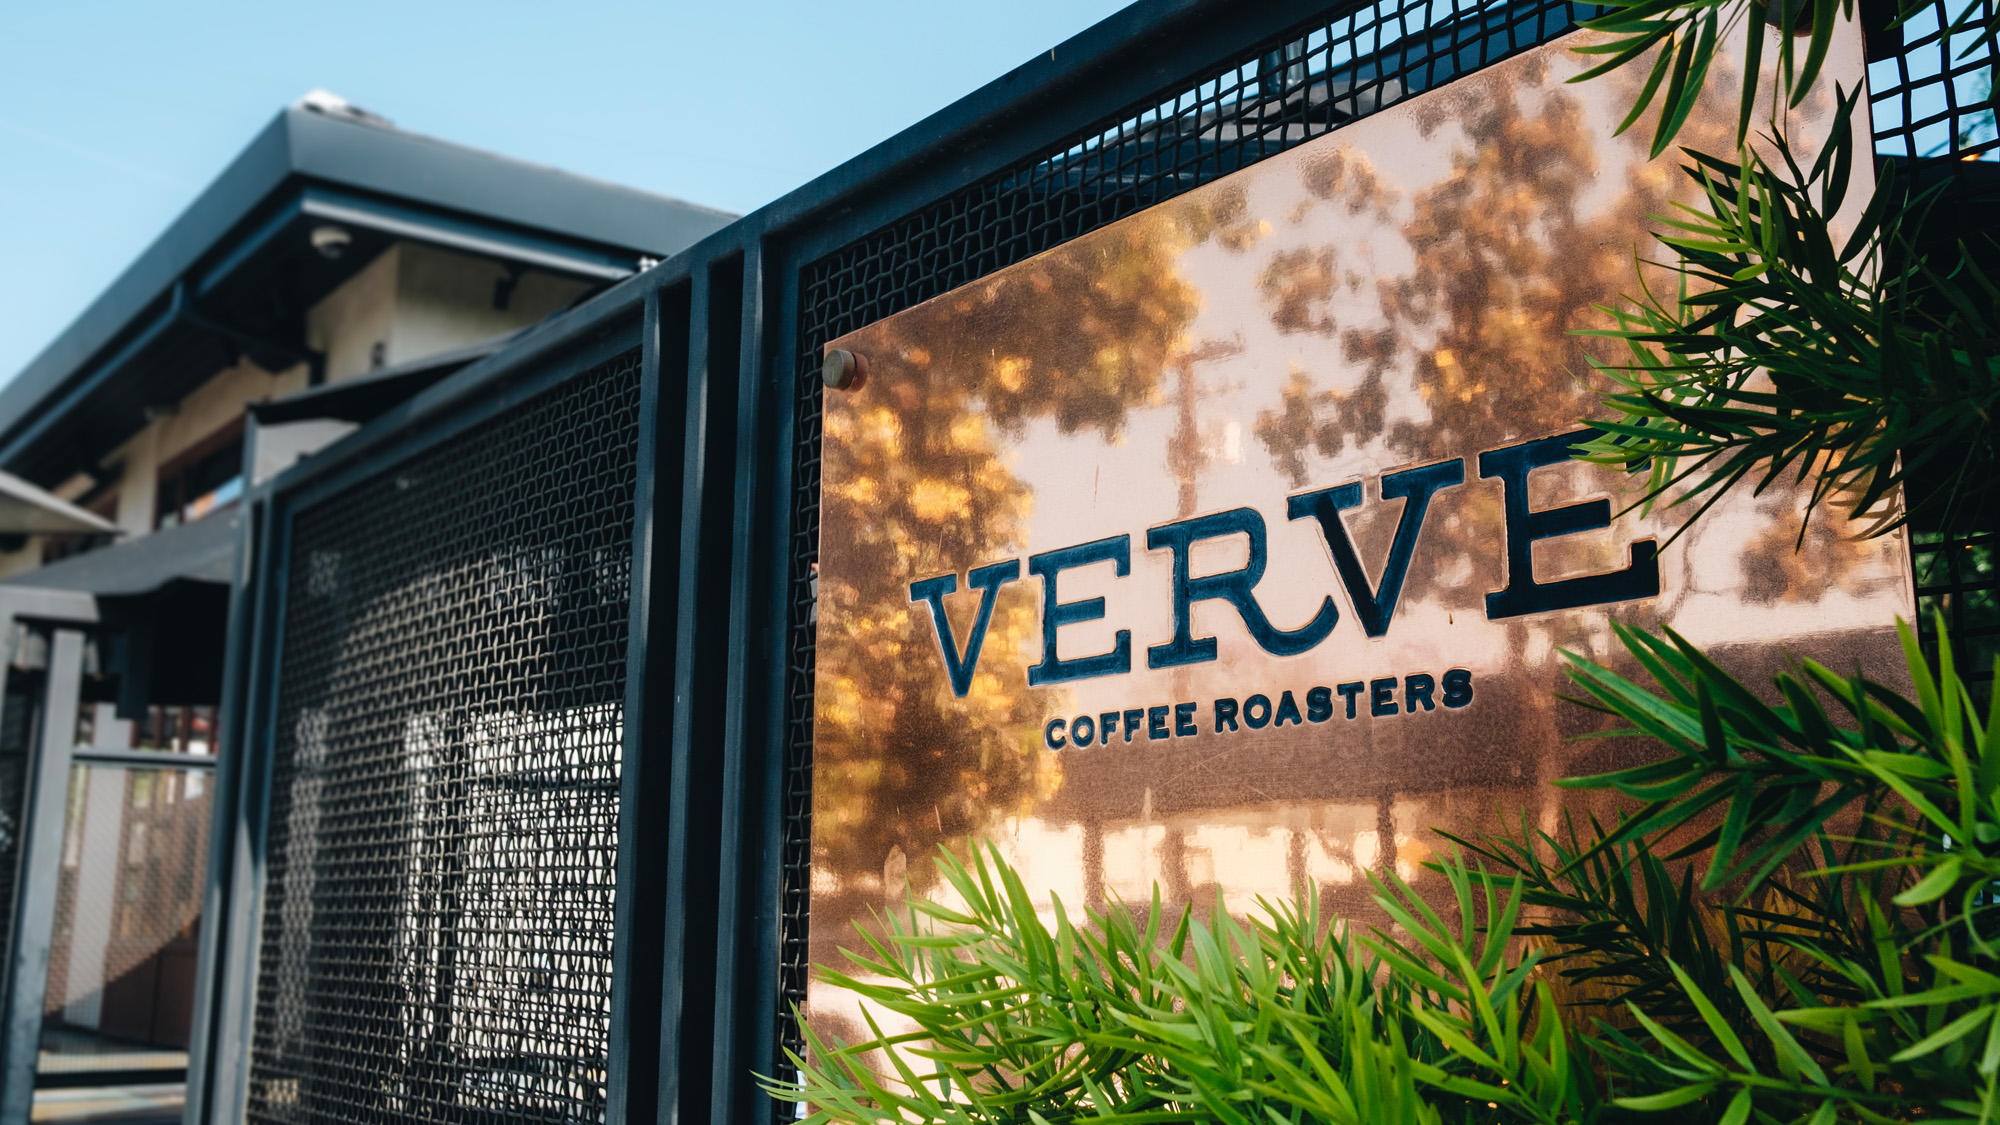 Verve Coffee Roasters Photo